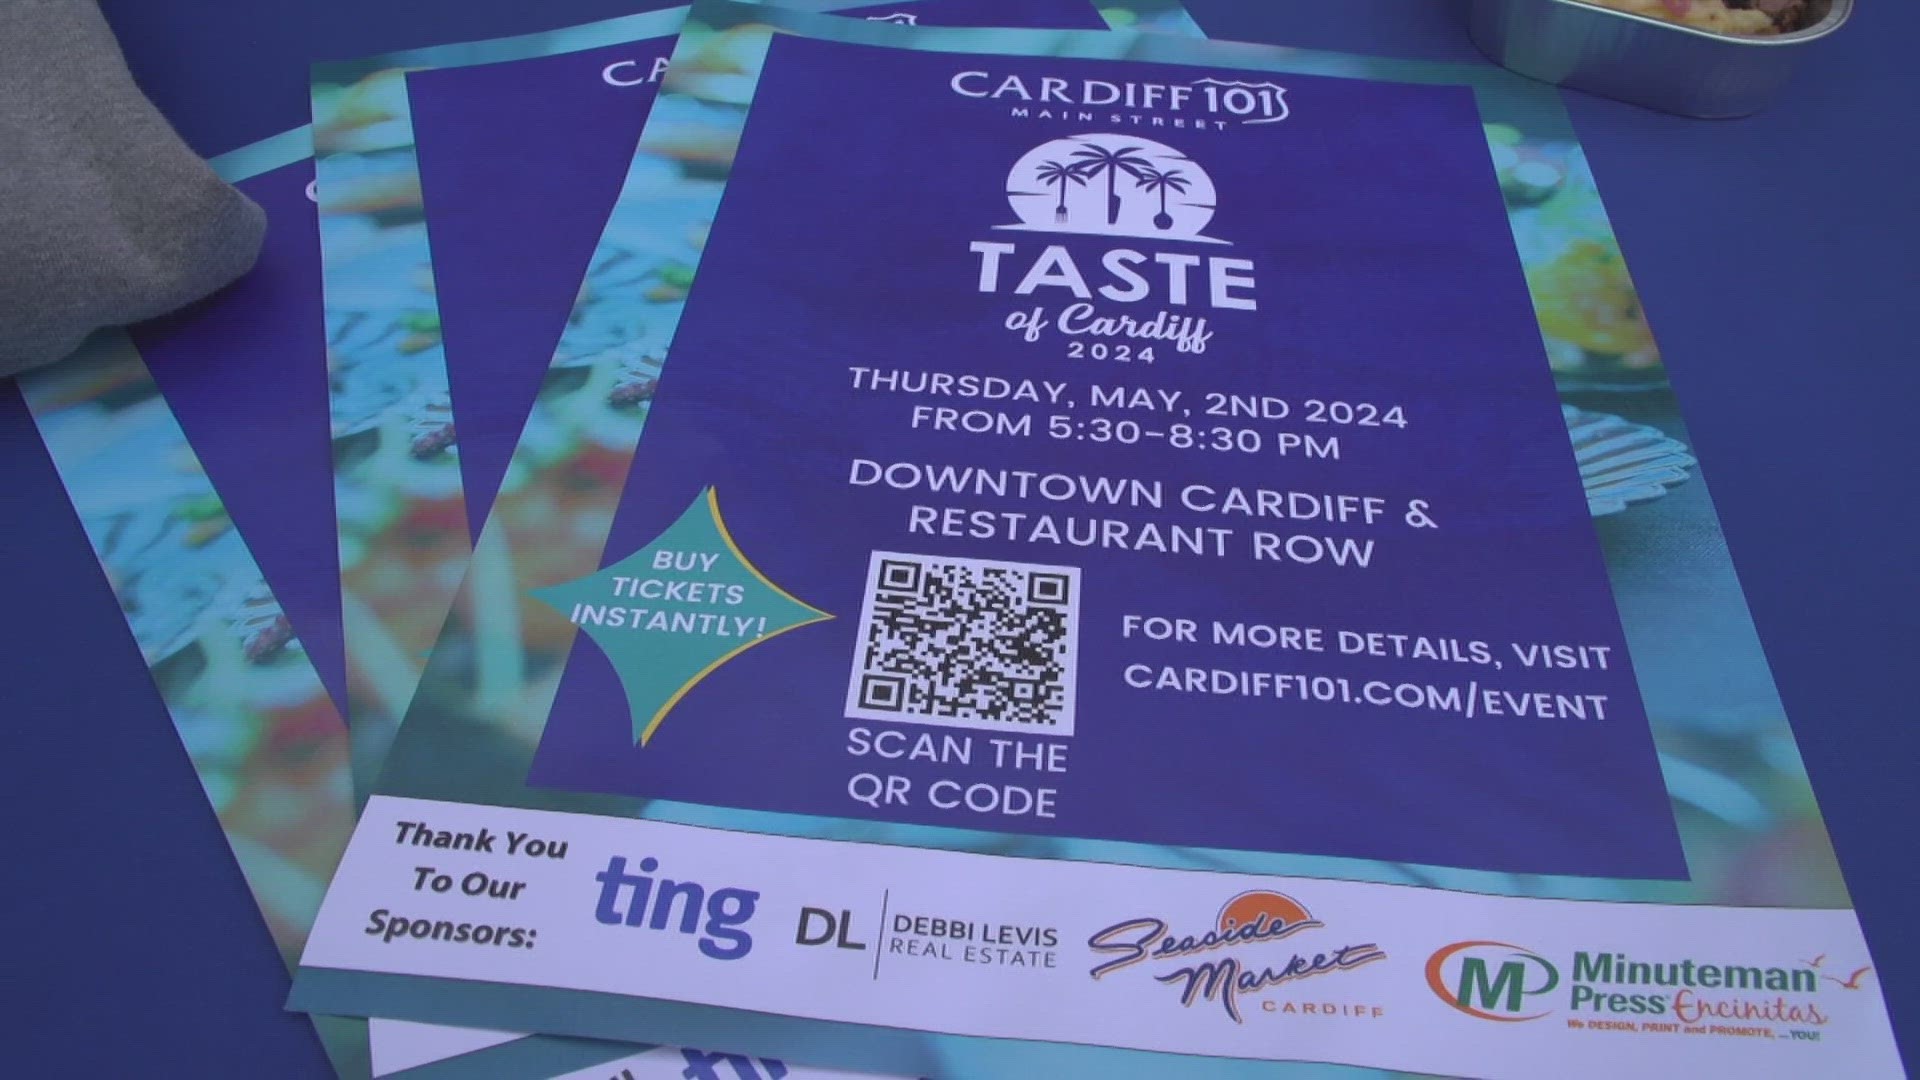 Taste of Cardiff kicks off on Thursday, May 2. https://www.cardiff101.com/events-calendar/2024-taste